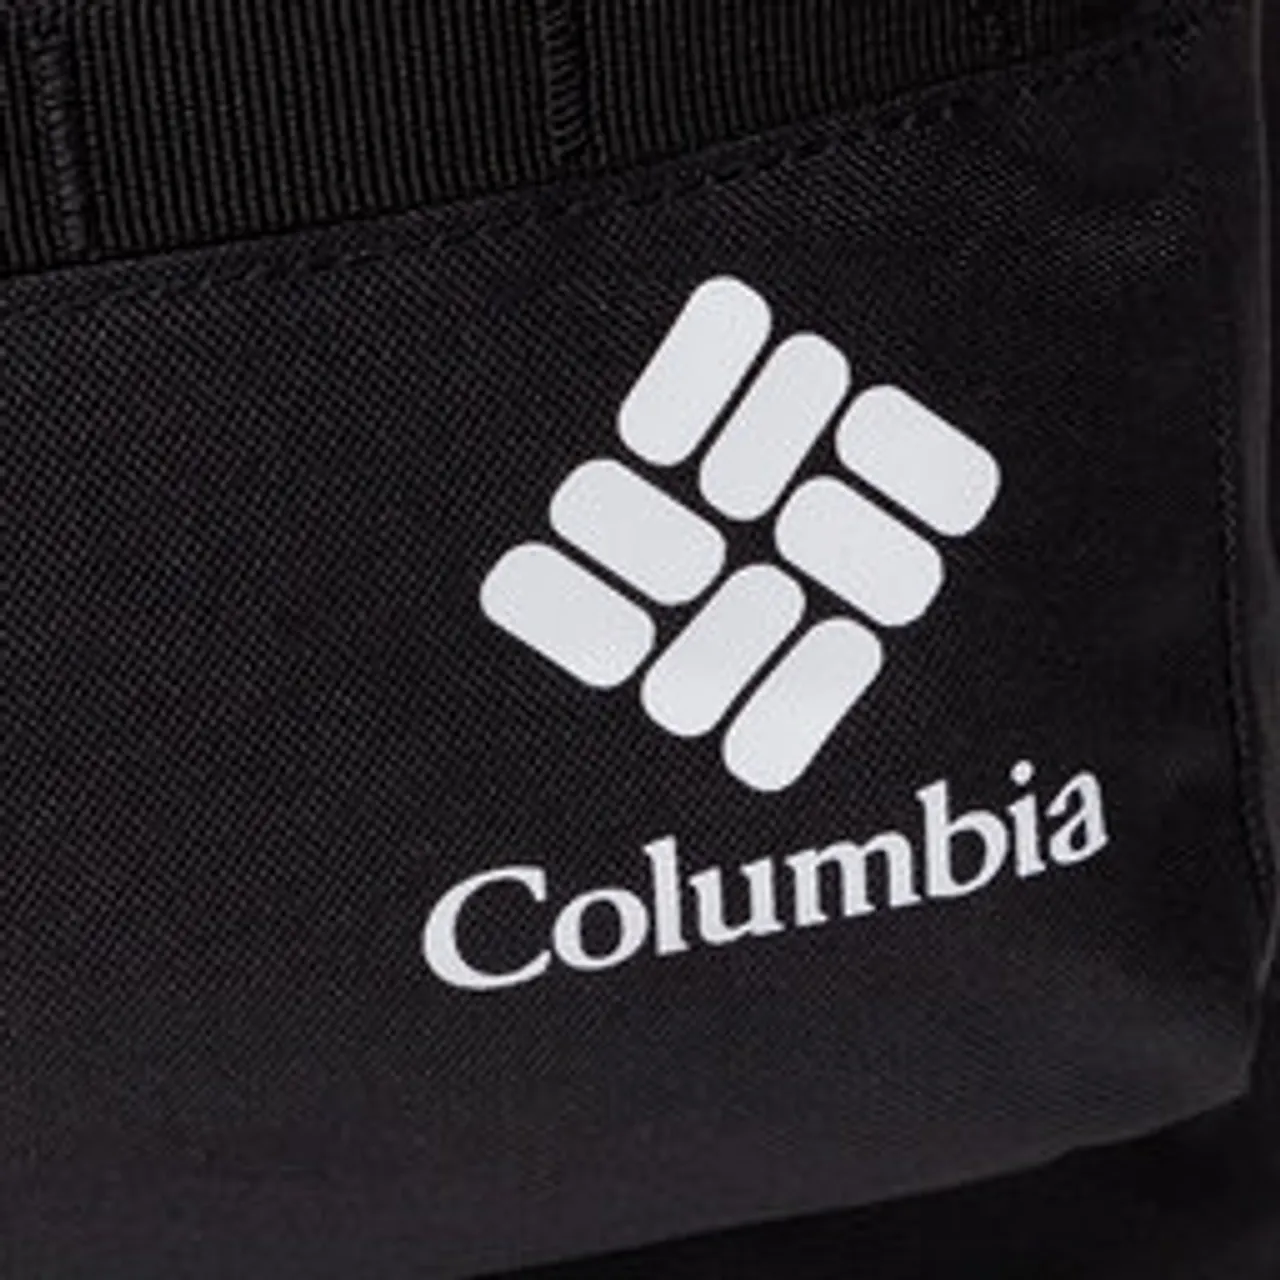 Rucksack Columbia Zigzag 22L Backpack 1890021 Black 010